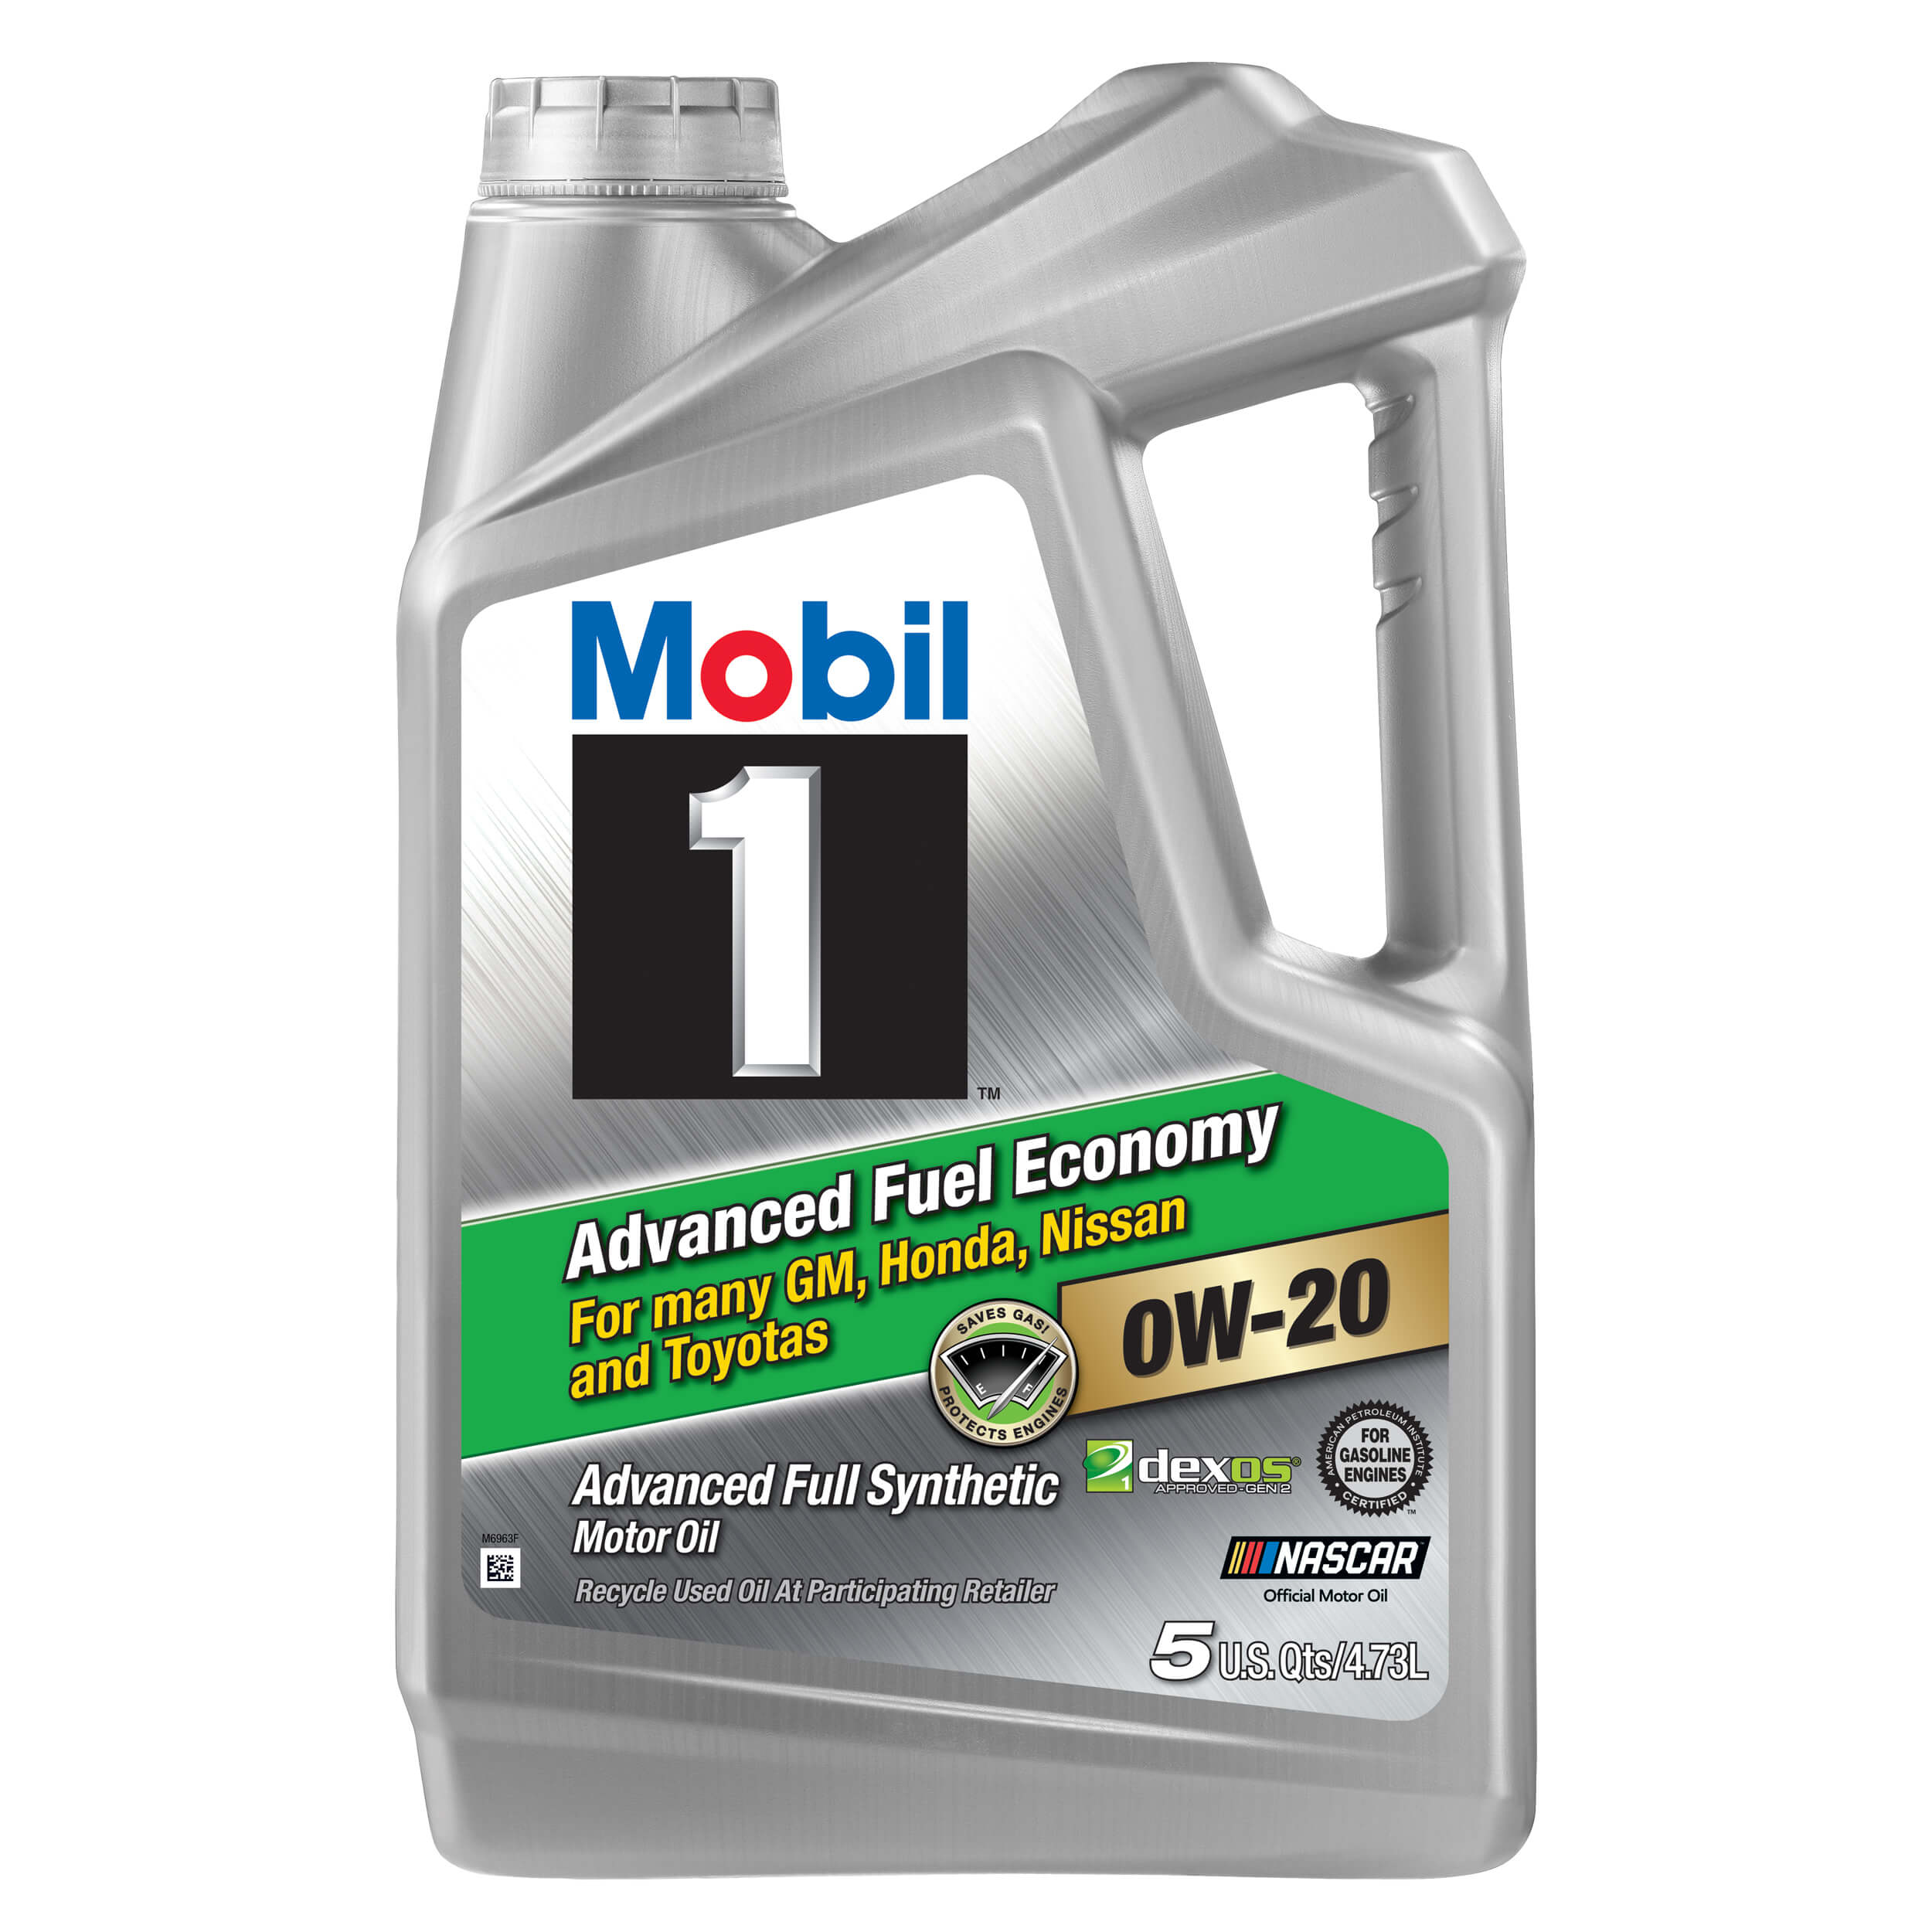 Mobil 1 Advanced Fuel Economy